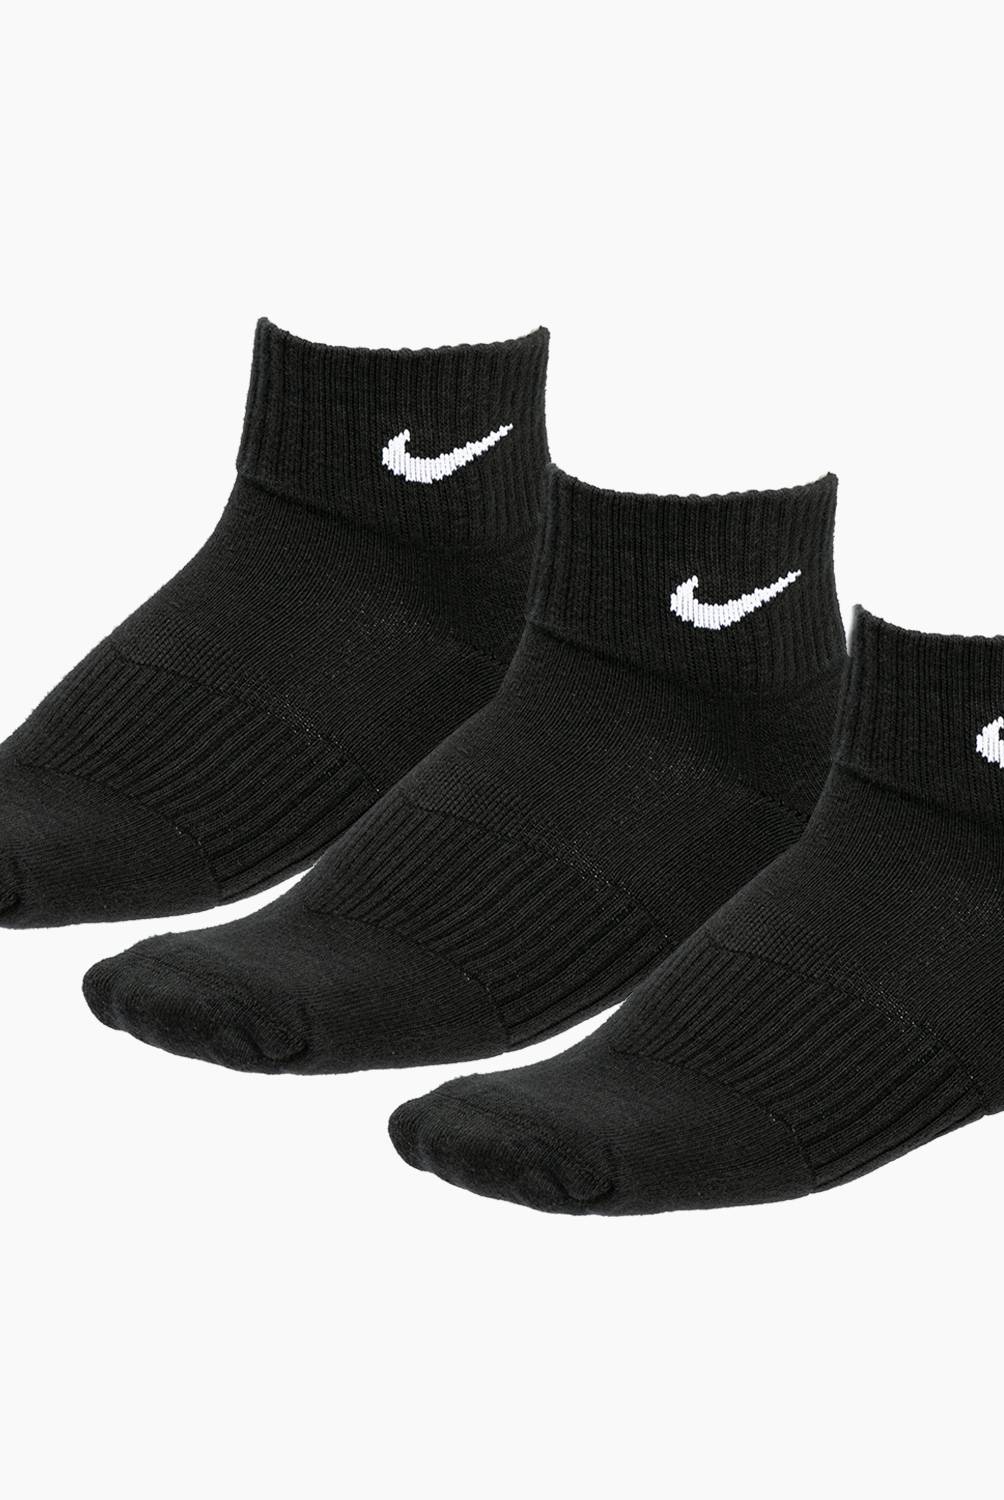 NIKE - Nike Pack De 3 Calcetines Cortos Deportivos